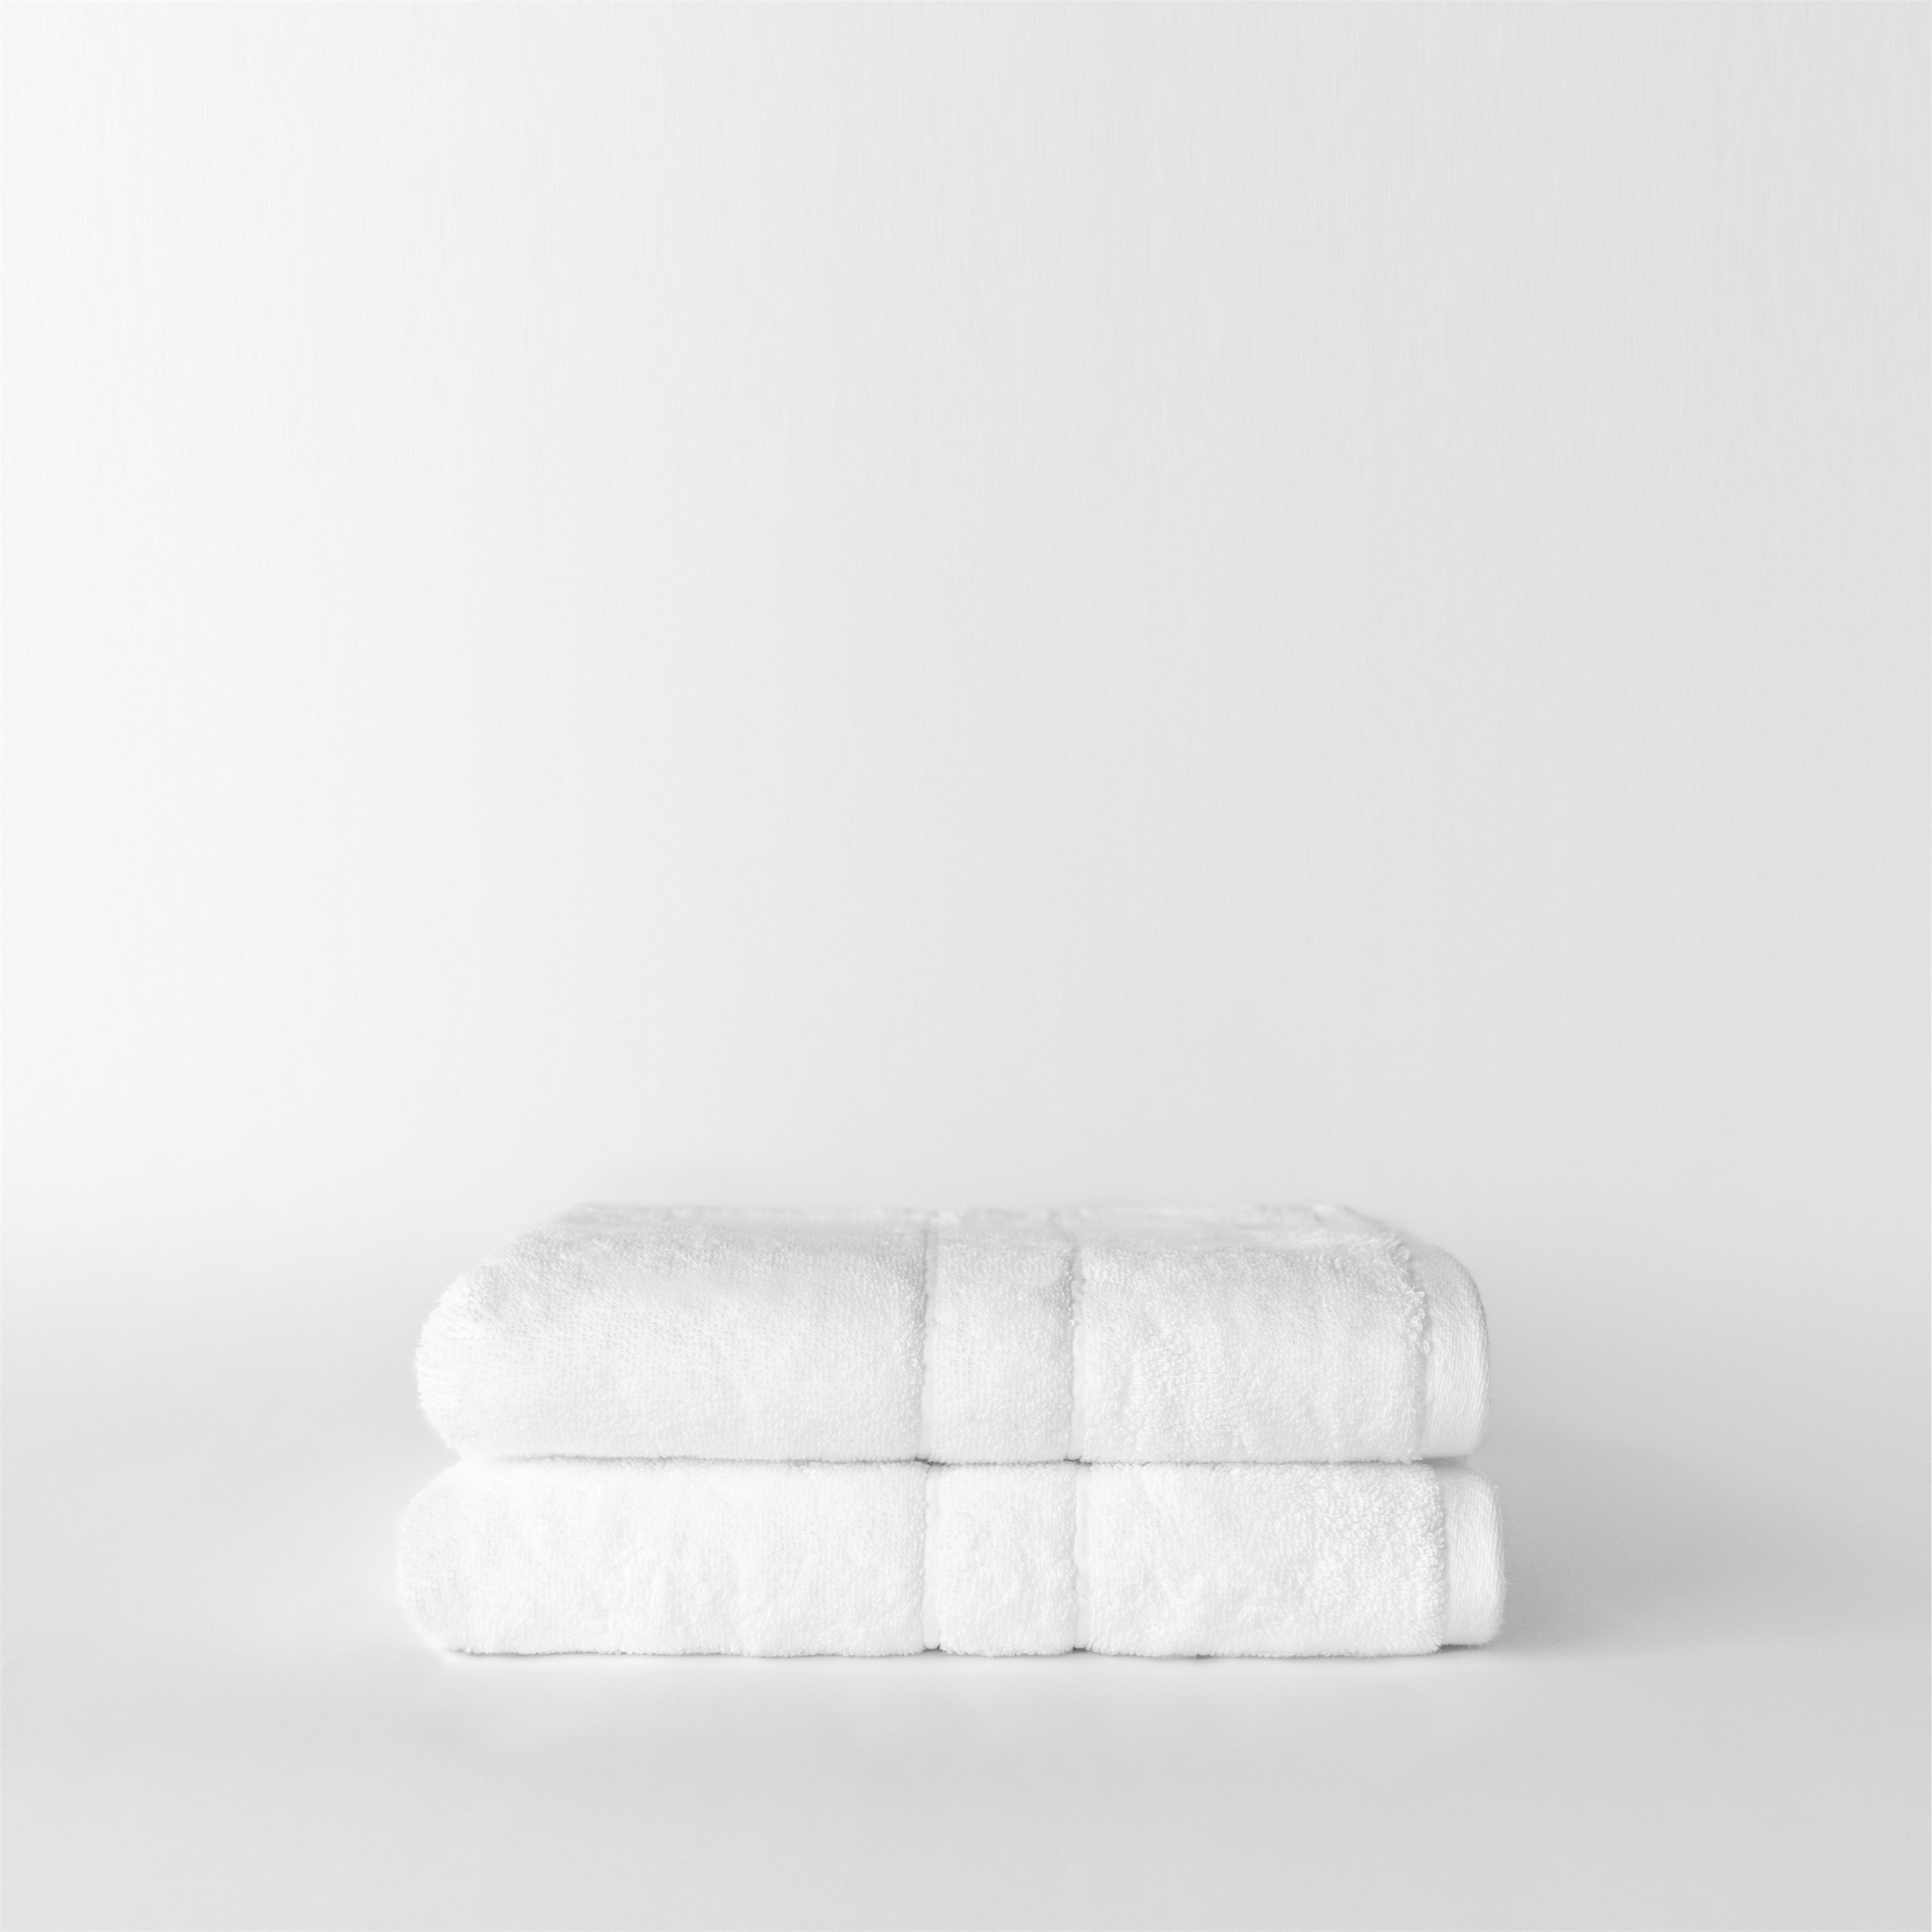 Premium Plush Hand Towels in the color white. Photo of Complete Premium Plush Hand Towel taken with white background |Color:White